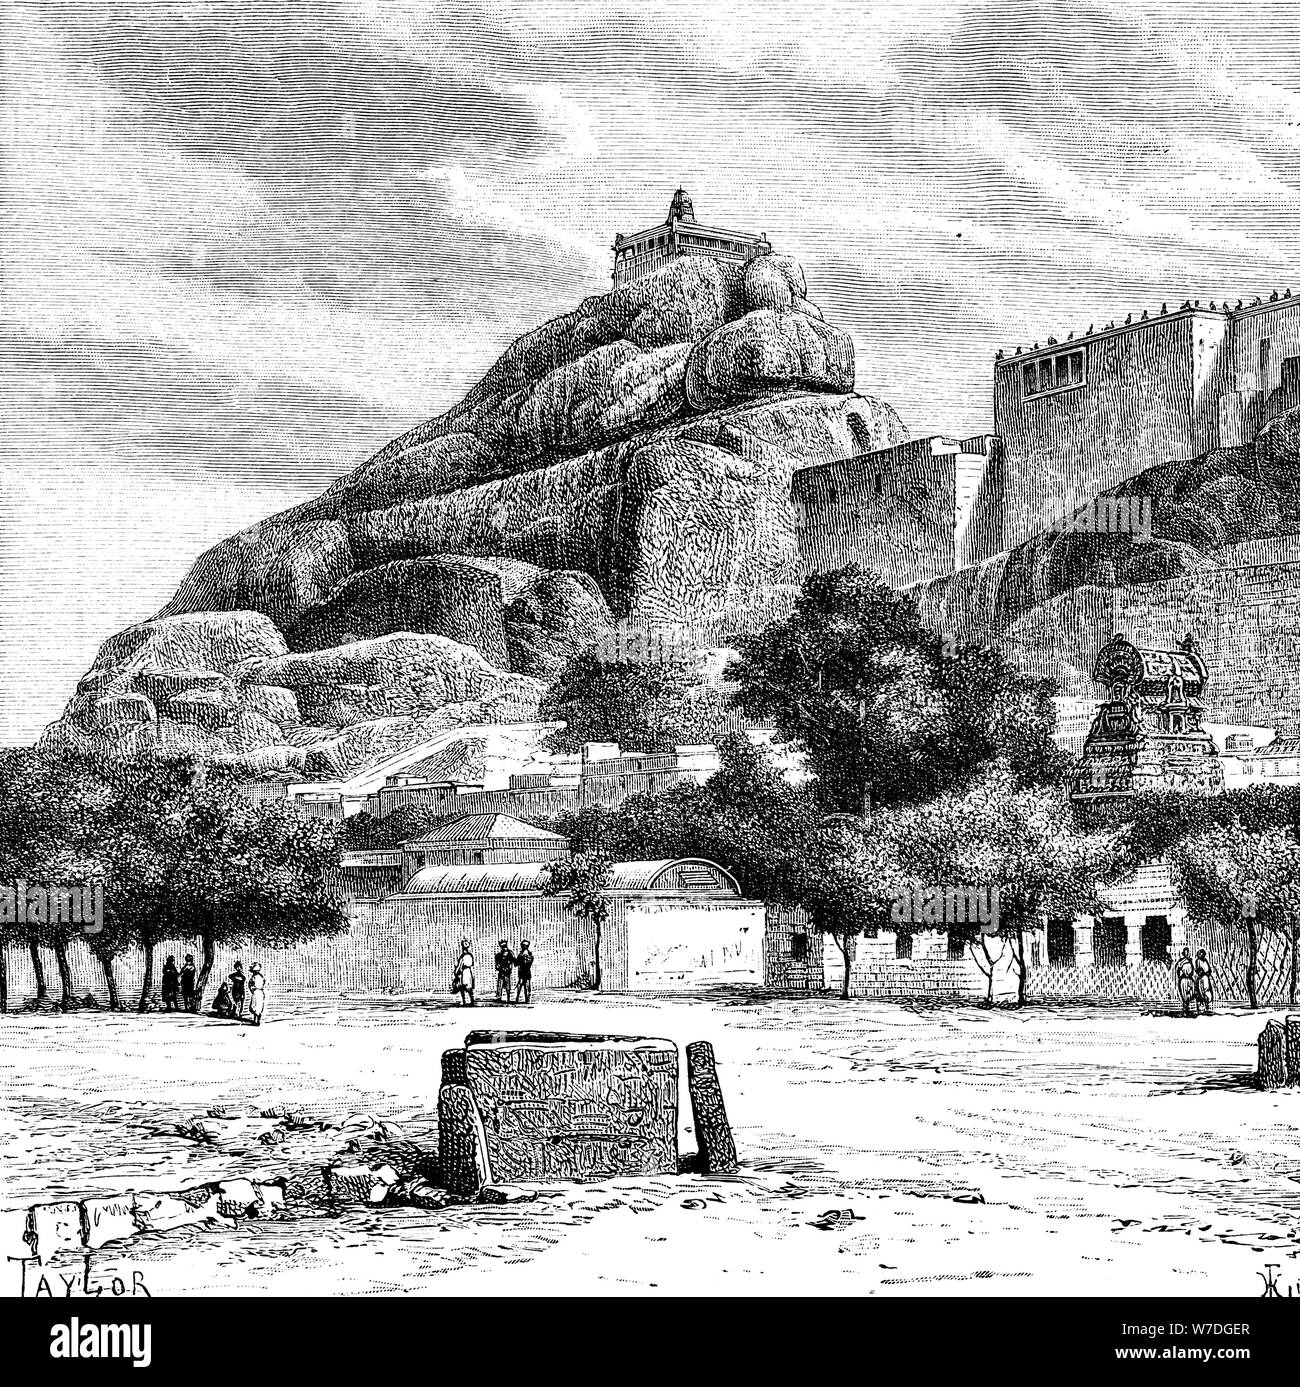 The Rock Fort Temple of Tiruchirapalli, India, 1895.Artist: Taylor Stock Photo